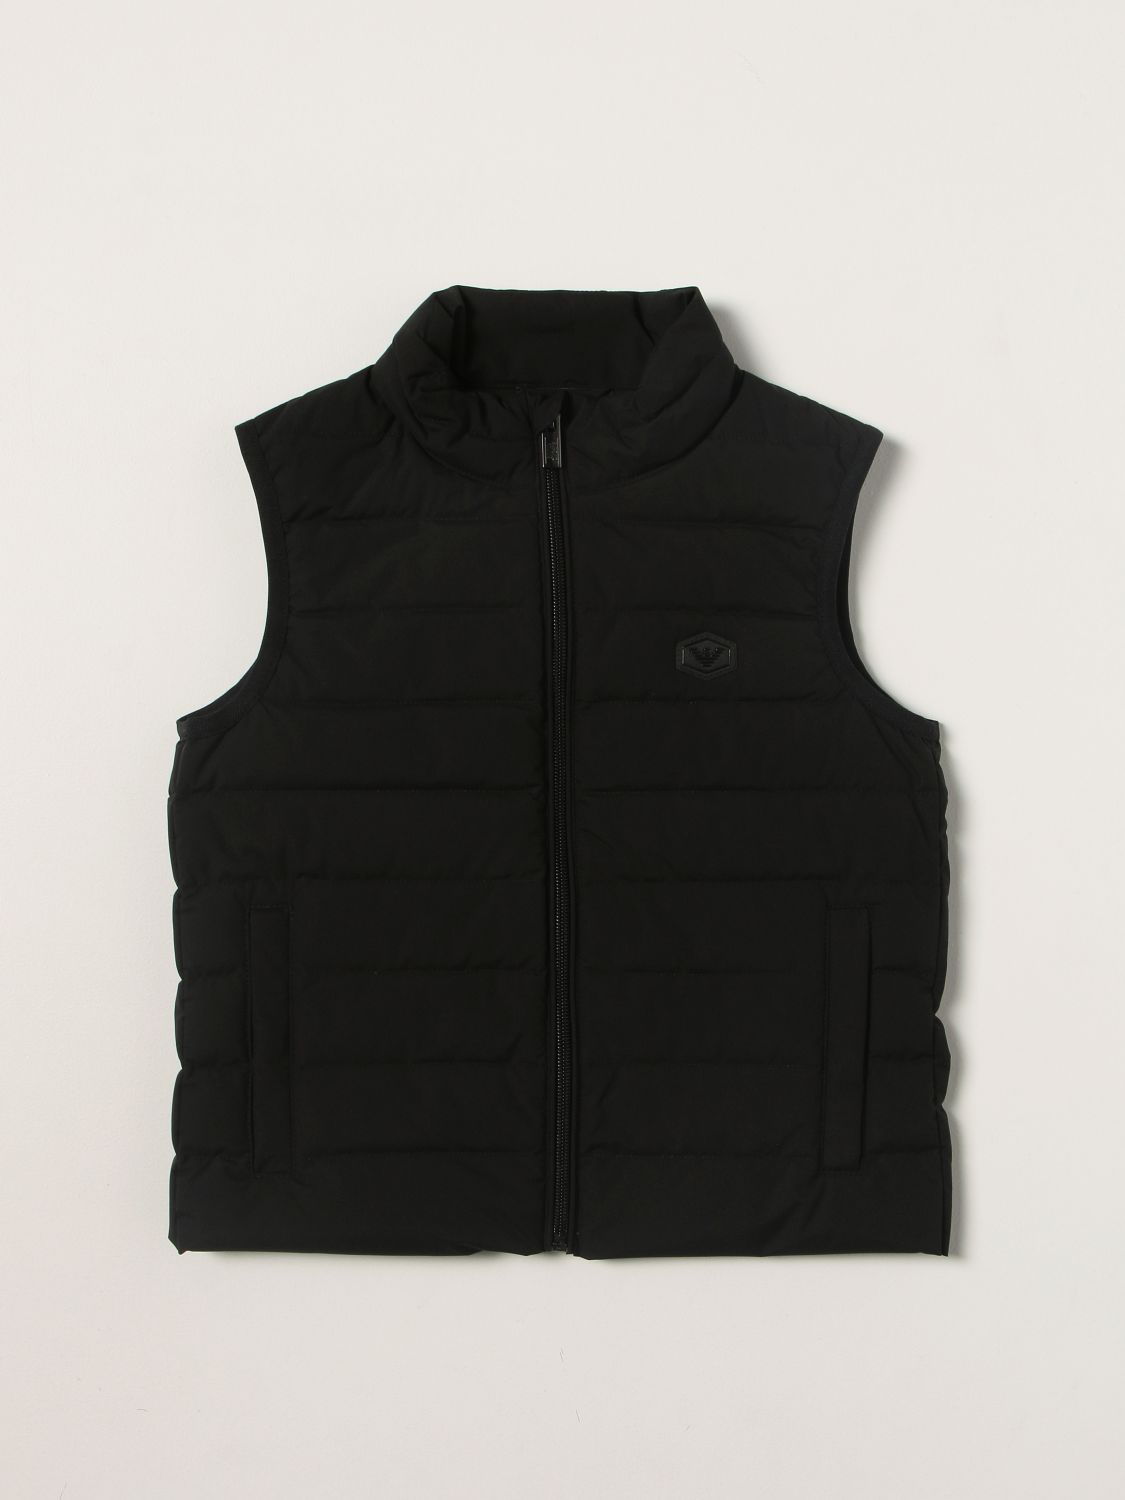 EMPORIO ARMANI: sleeveless down jacket in technical fabric with eagle logo  - Black | Emporio Armani waistcoat 8N4BQ1 1NLRZ online on 